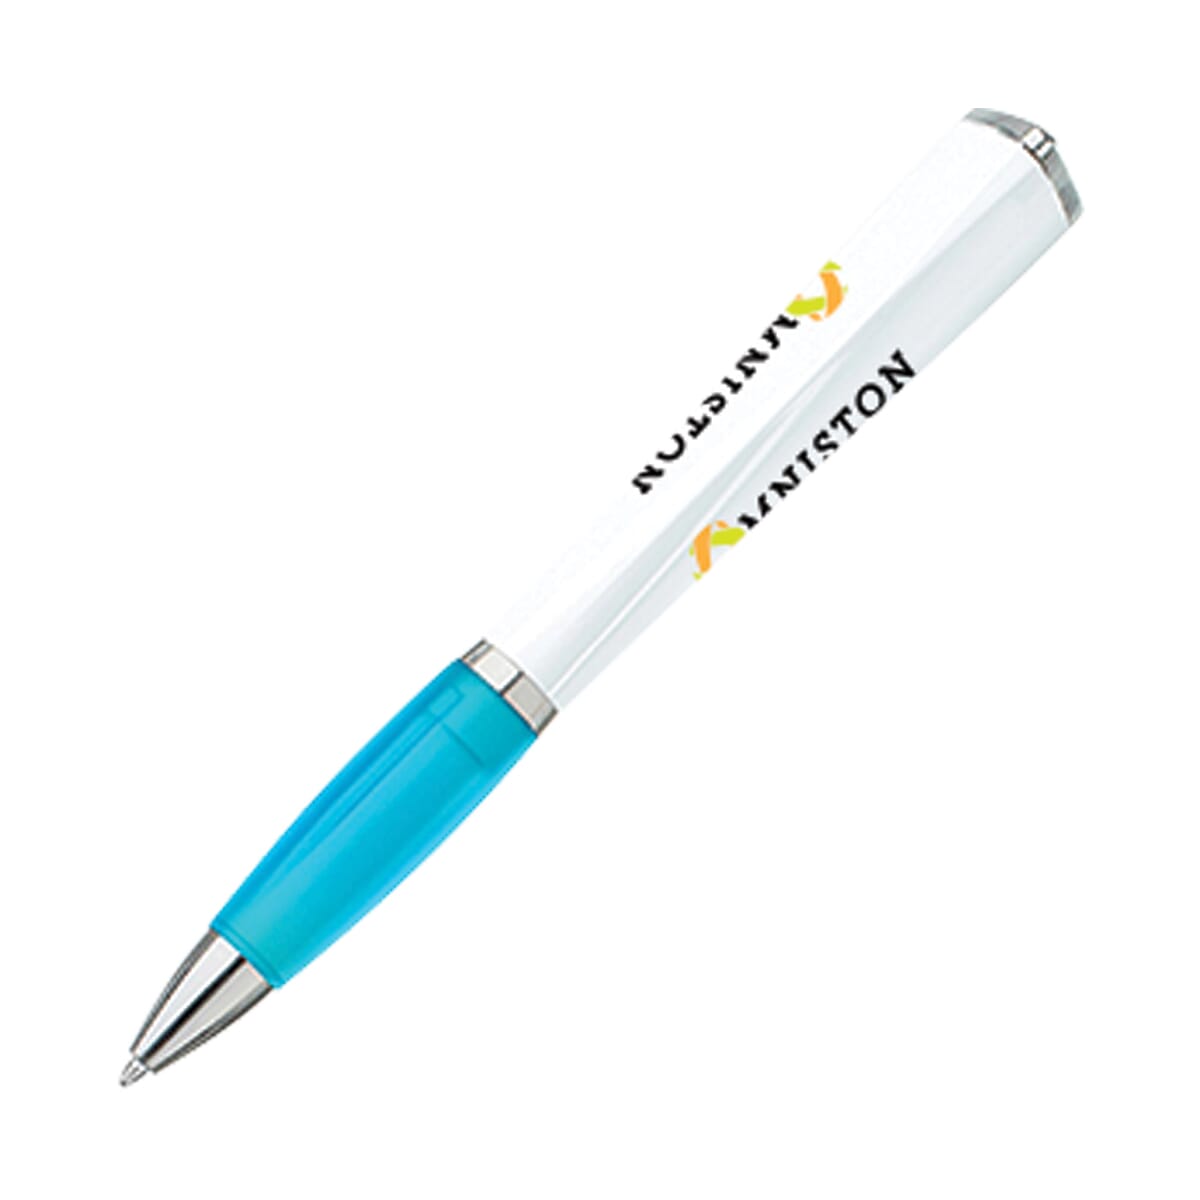 Ergonomic pen with 3 logos